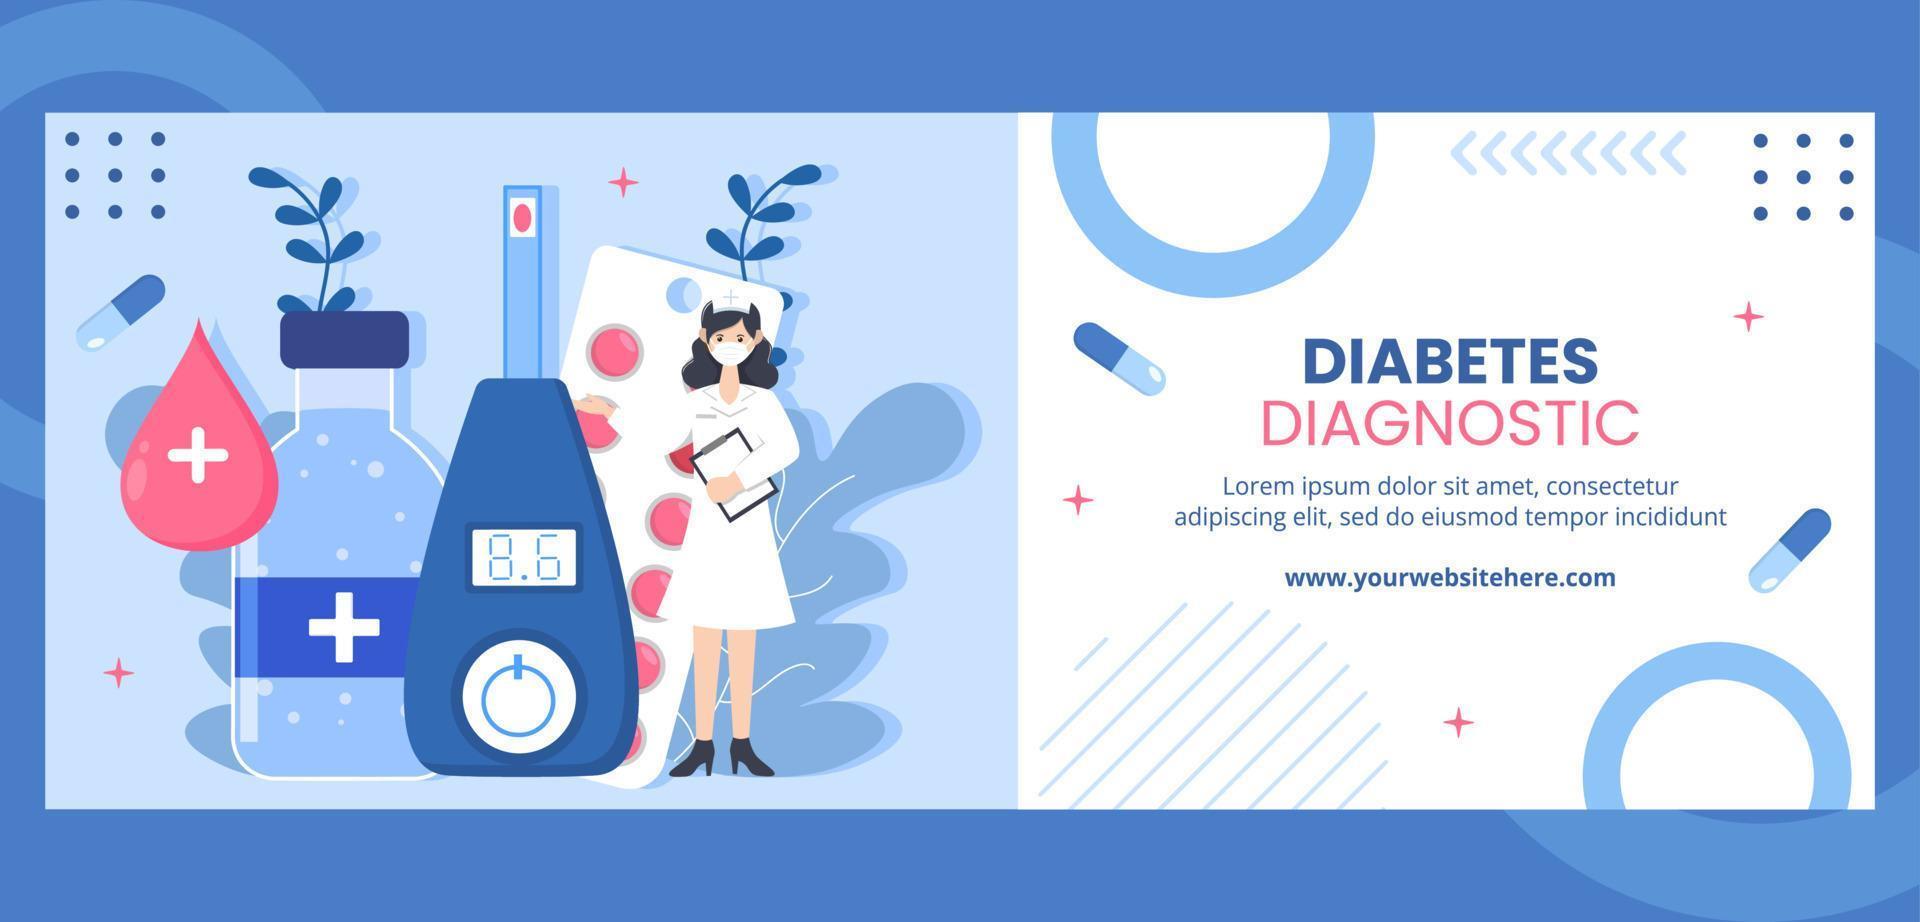 Diabetes Testing Healthcare Cover Flat Cartoon Hand Drawn Templates Illustration vector